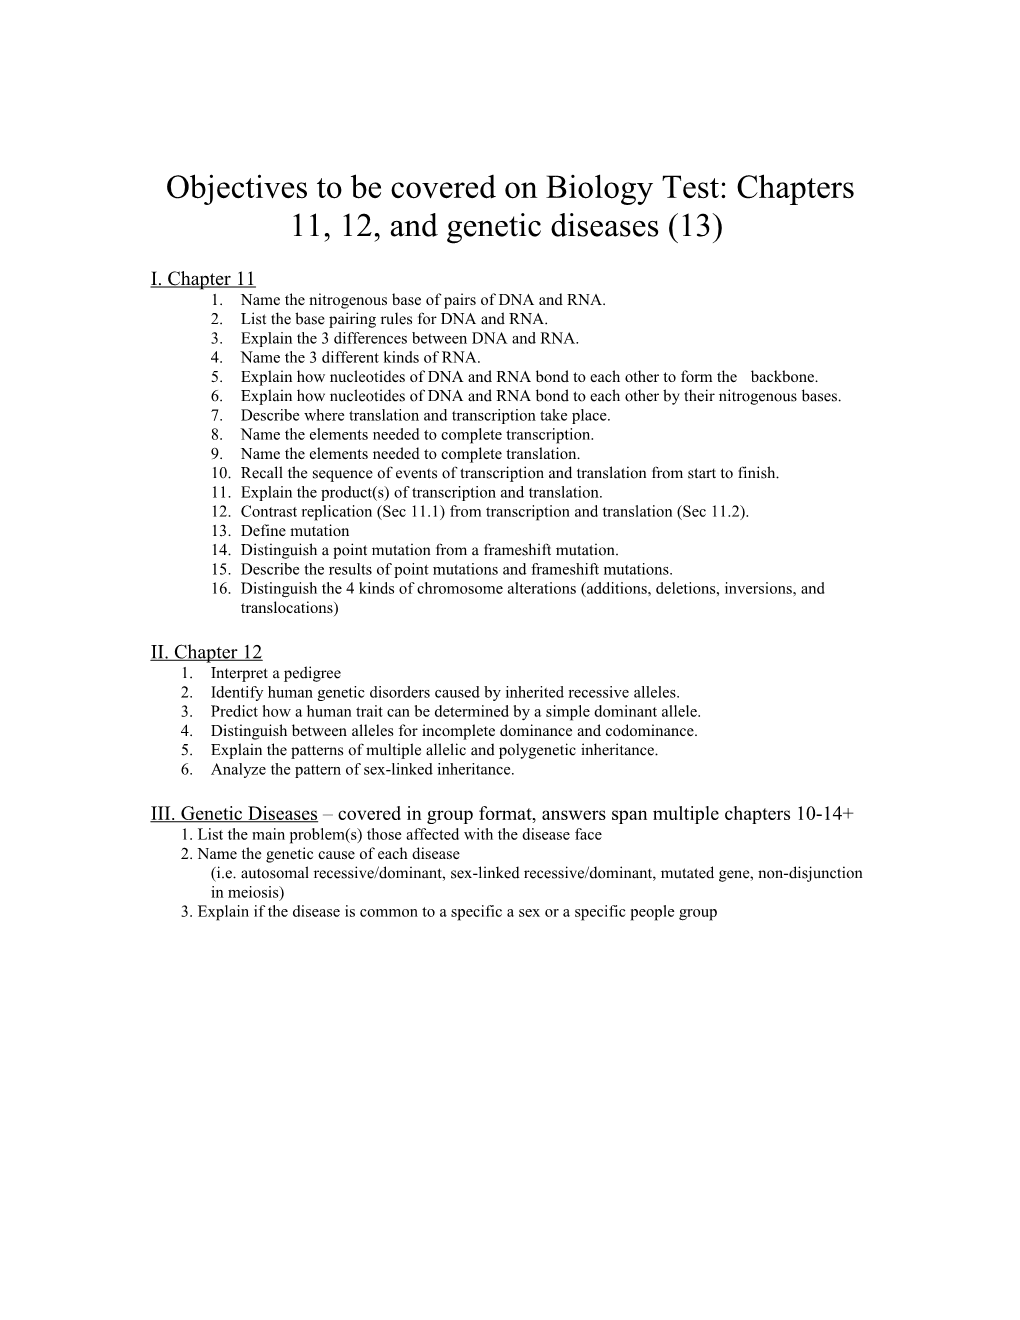 Biology - Chapter 11 Assessment Pg 306-307 #1-13, 20-24